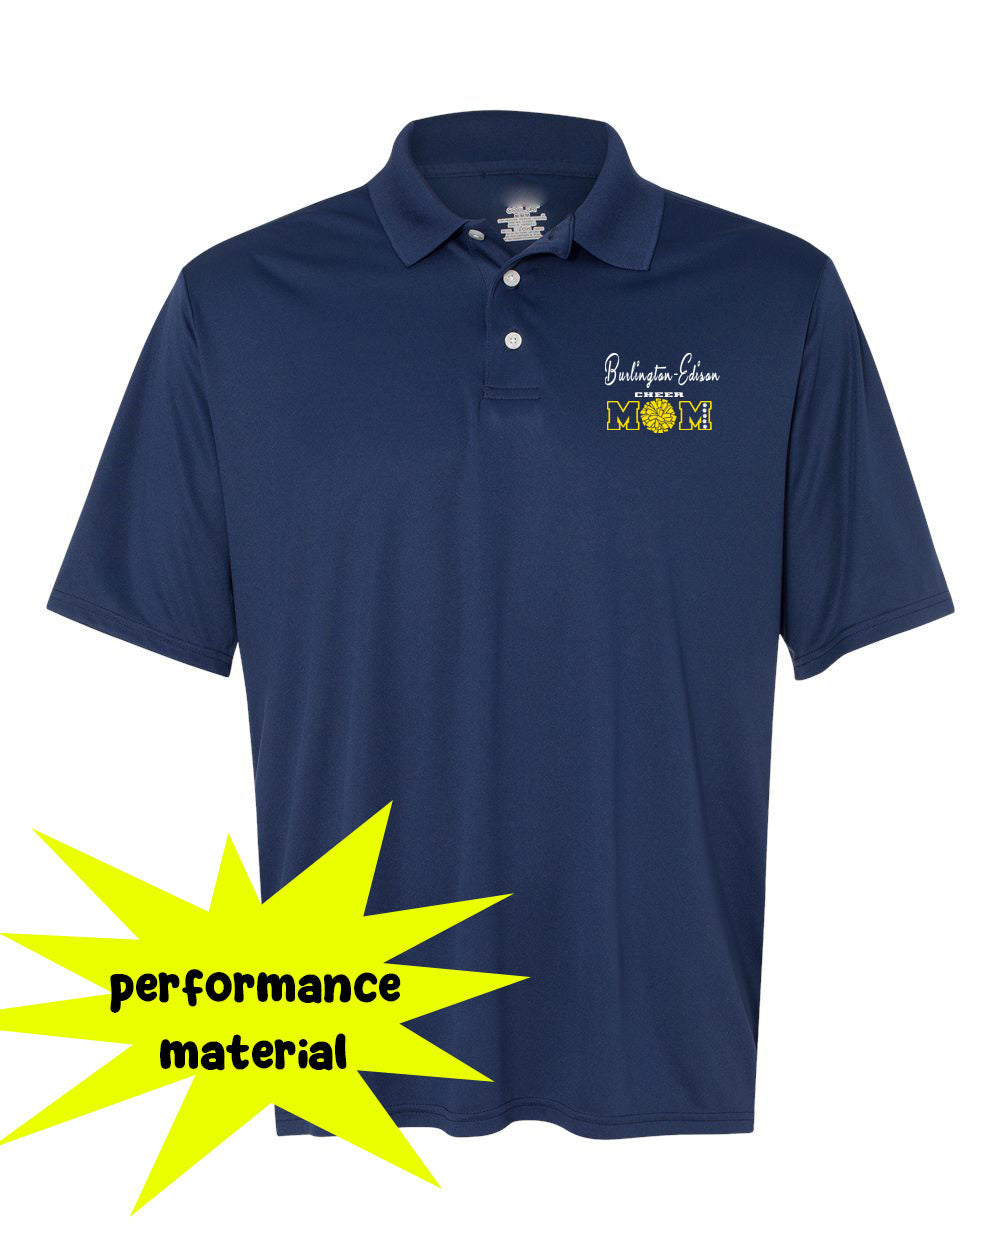 Burlington Edison Cheer Performance Material Polo T-Shirt Design 5